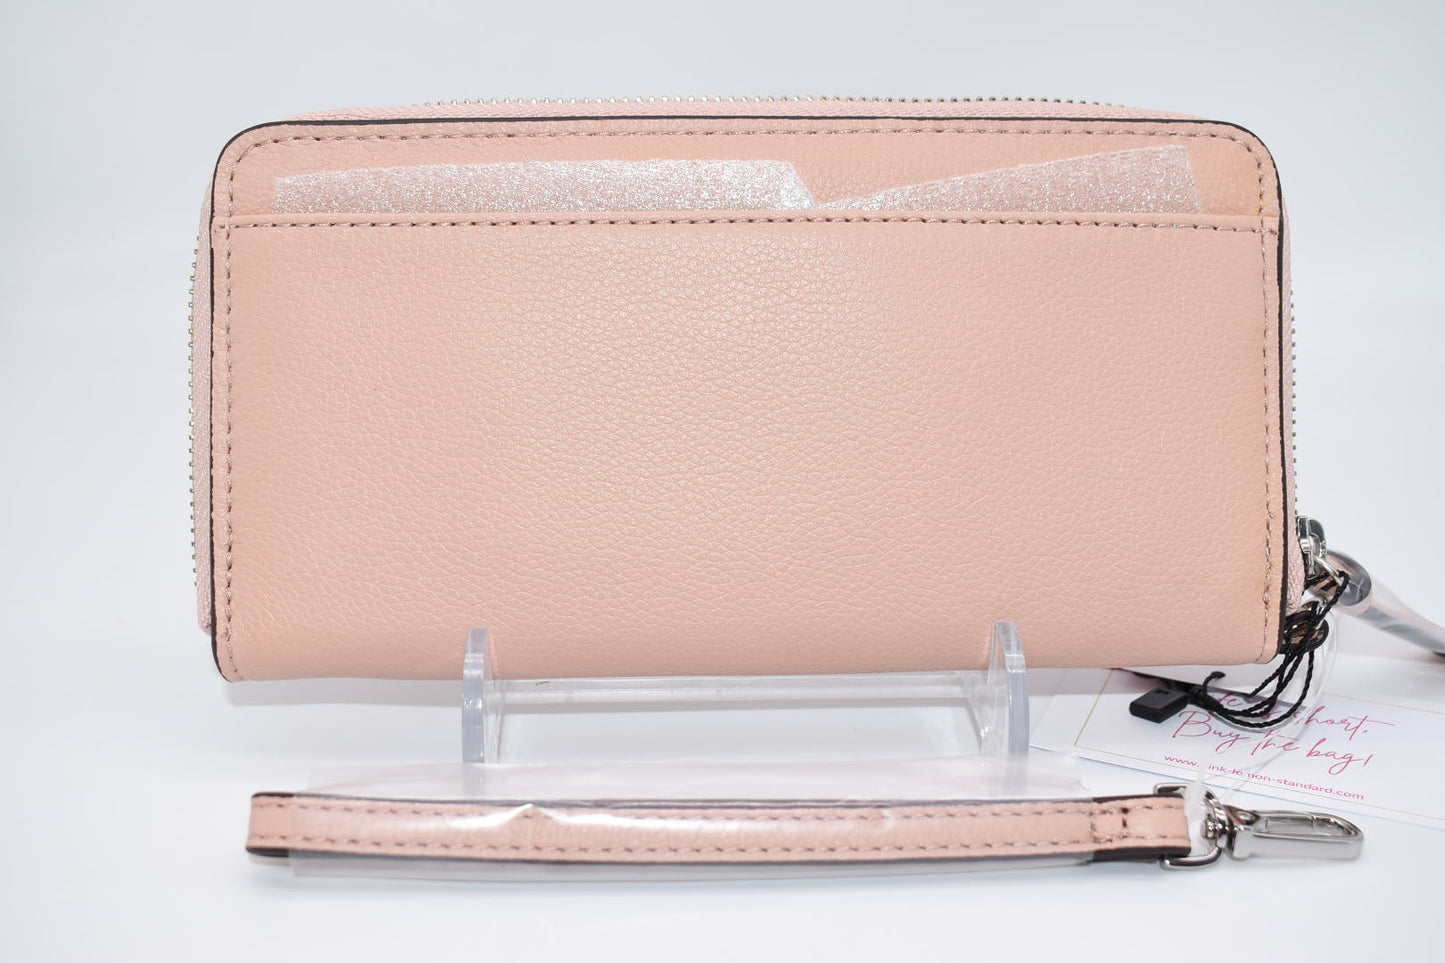 Vera Bradley Carryall RFID Leather Accordion Wristlet in Pink Sand